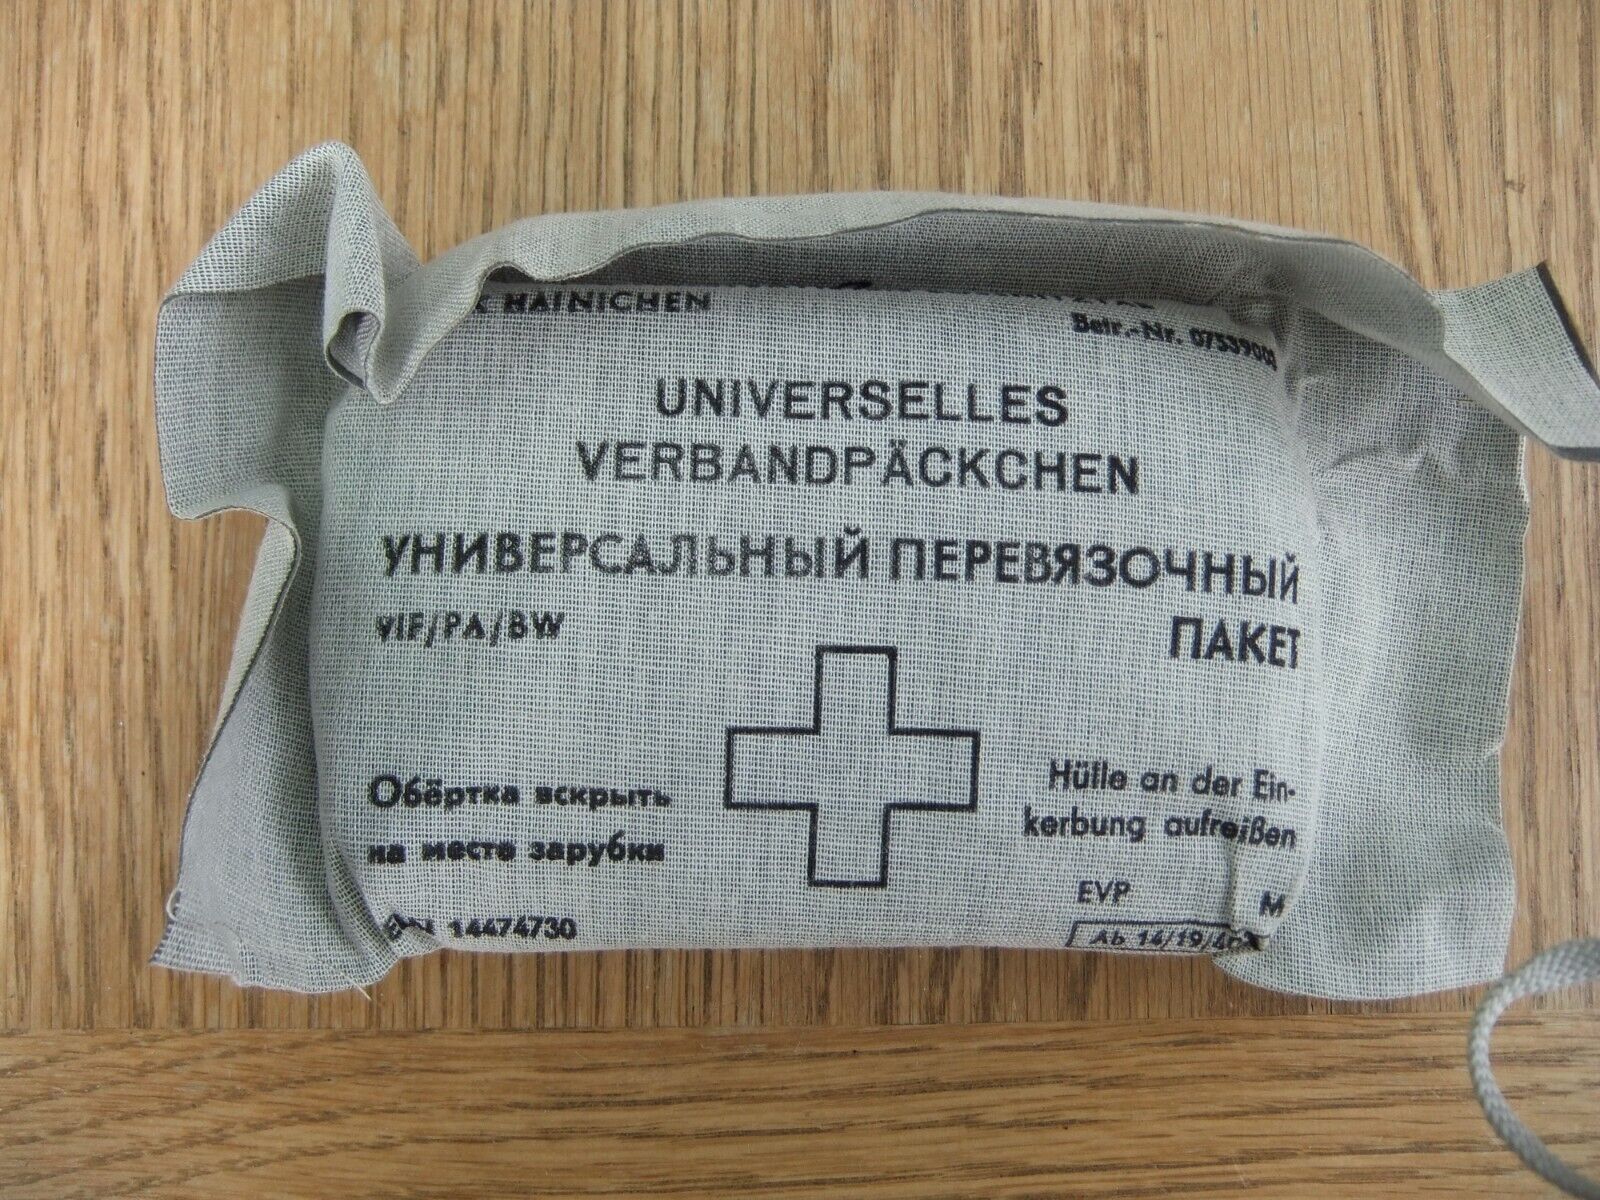 East German Army- NVA battle dressing/ Field bandage/ Verbandpackchen